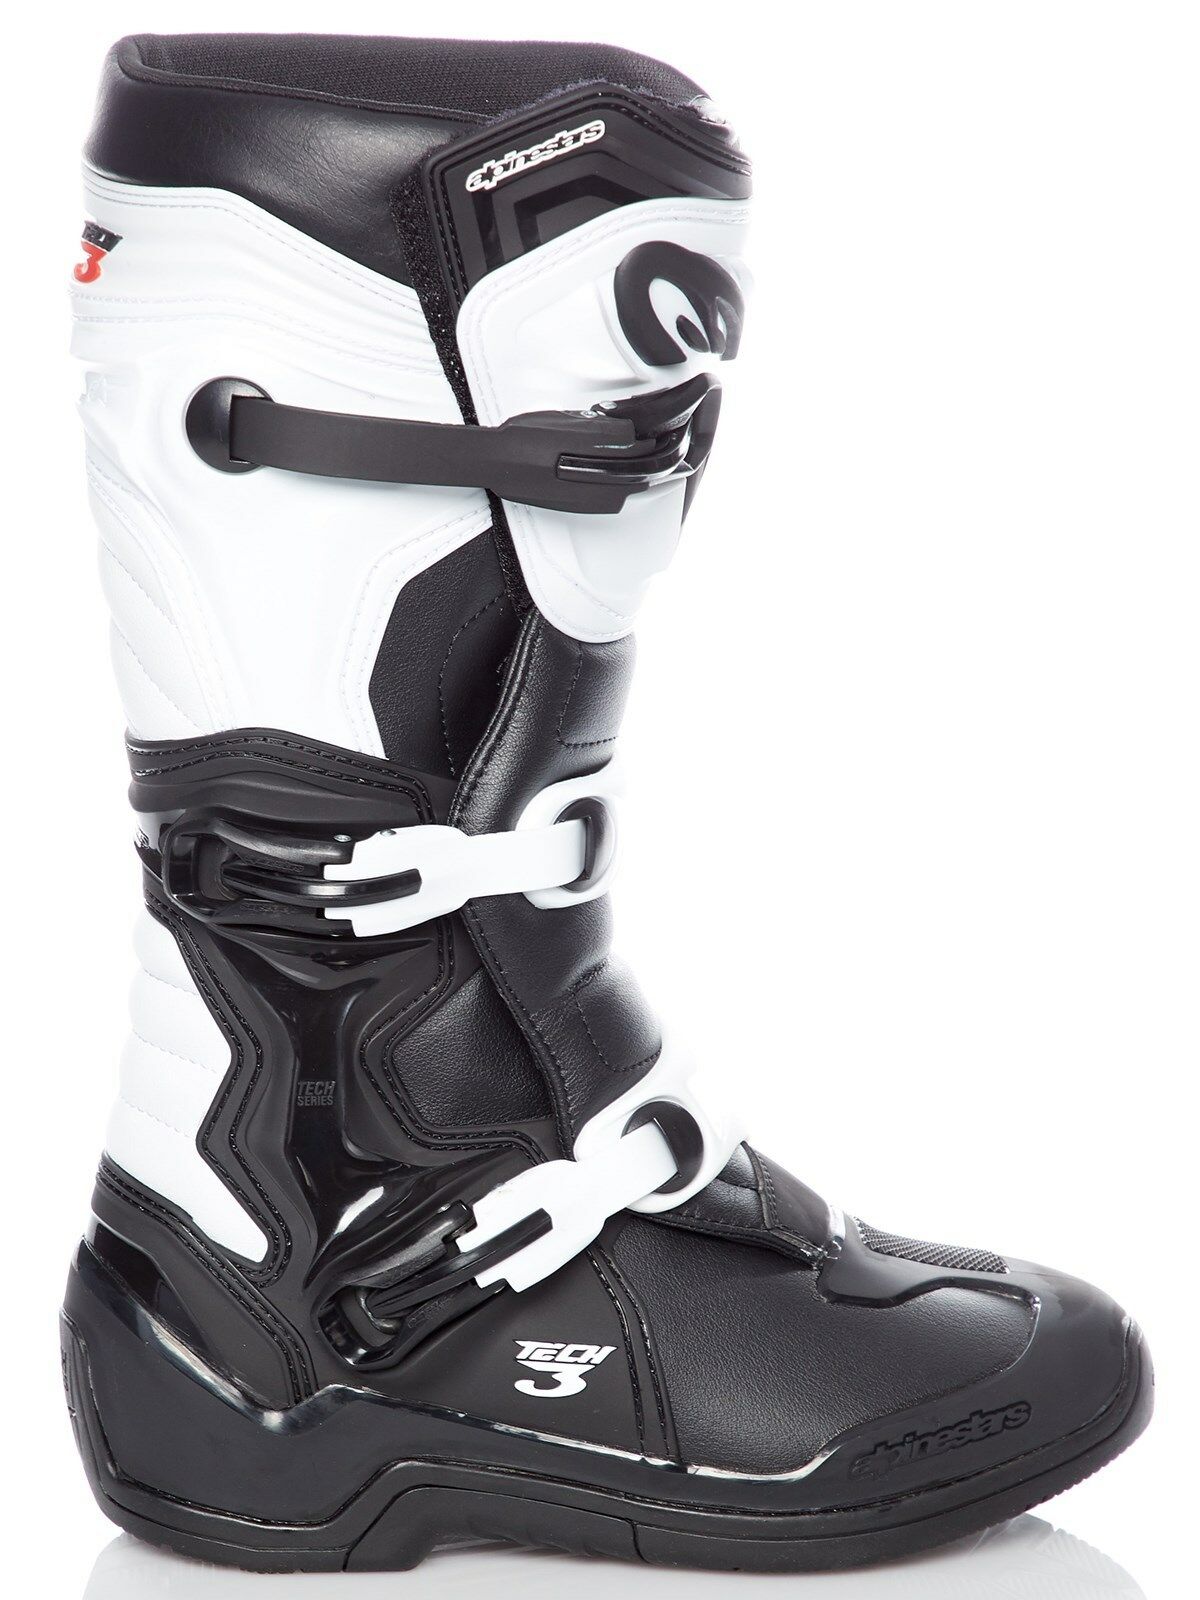 Alpinestars TECH 3 Motocross/Off-Road Boots Black White 